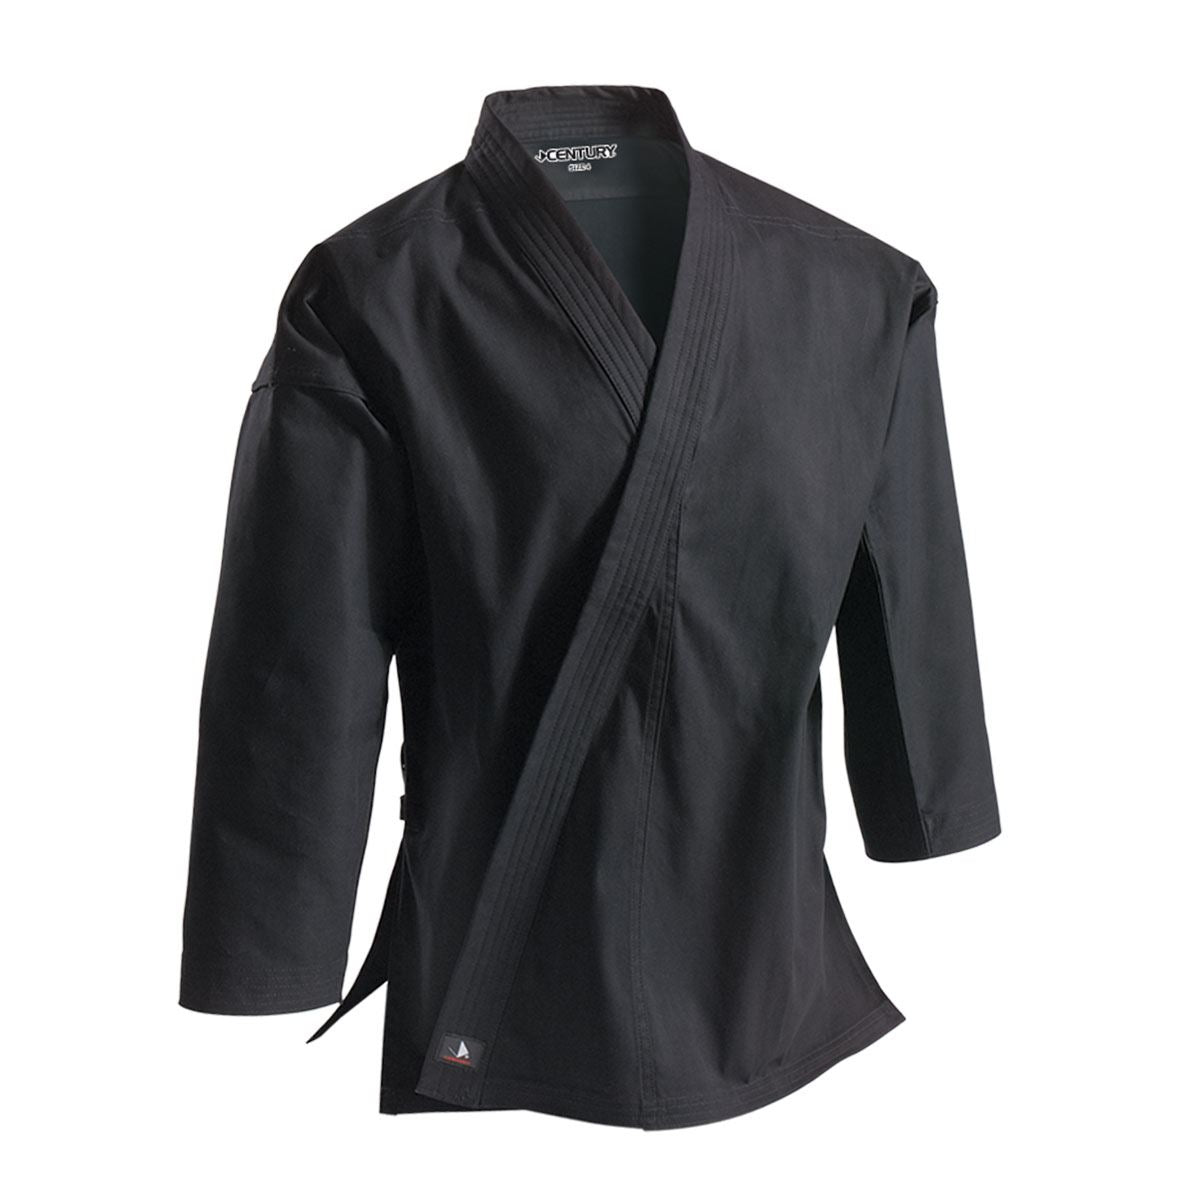 12 oz. Heavyweight Brushed Cotton Uniform black jacket front view